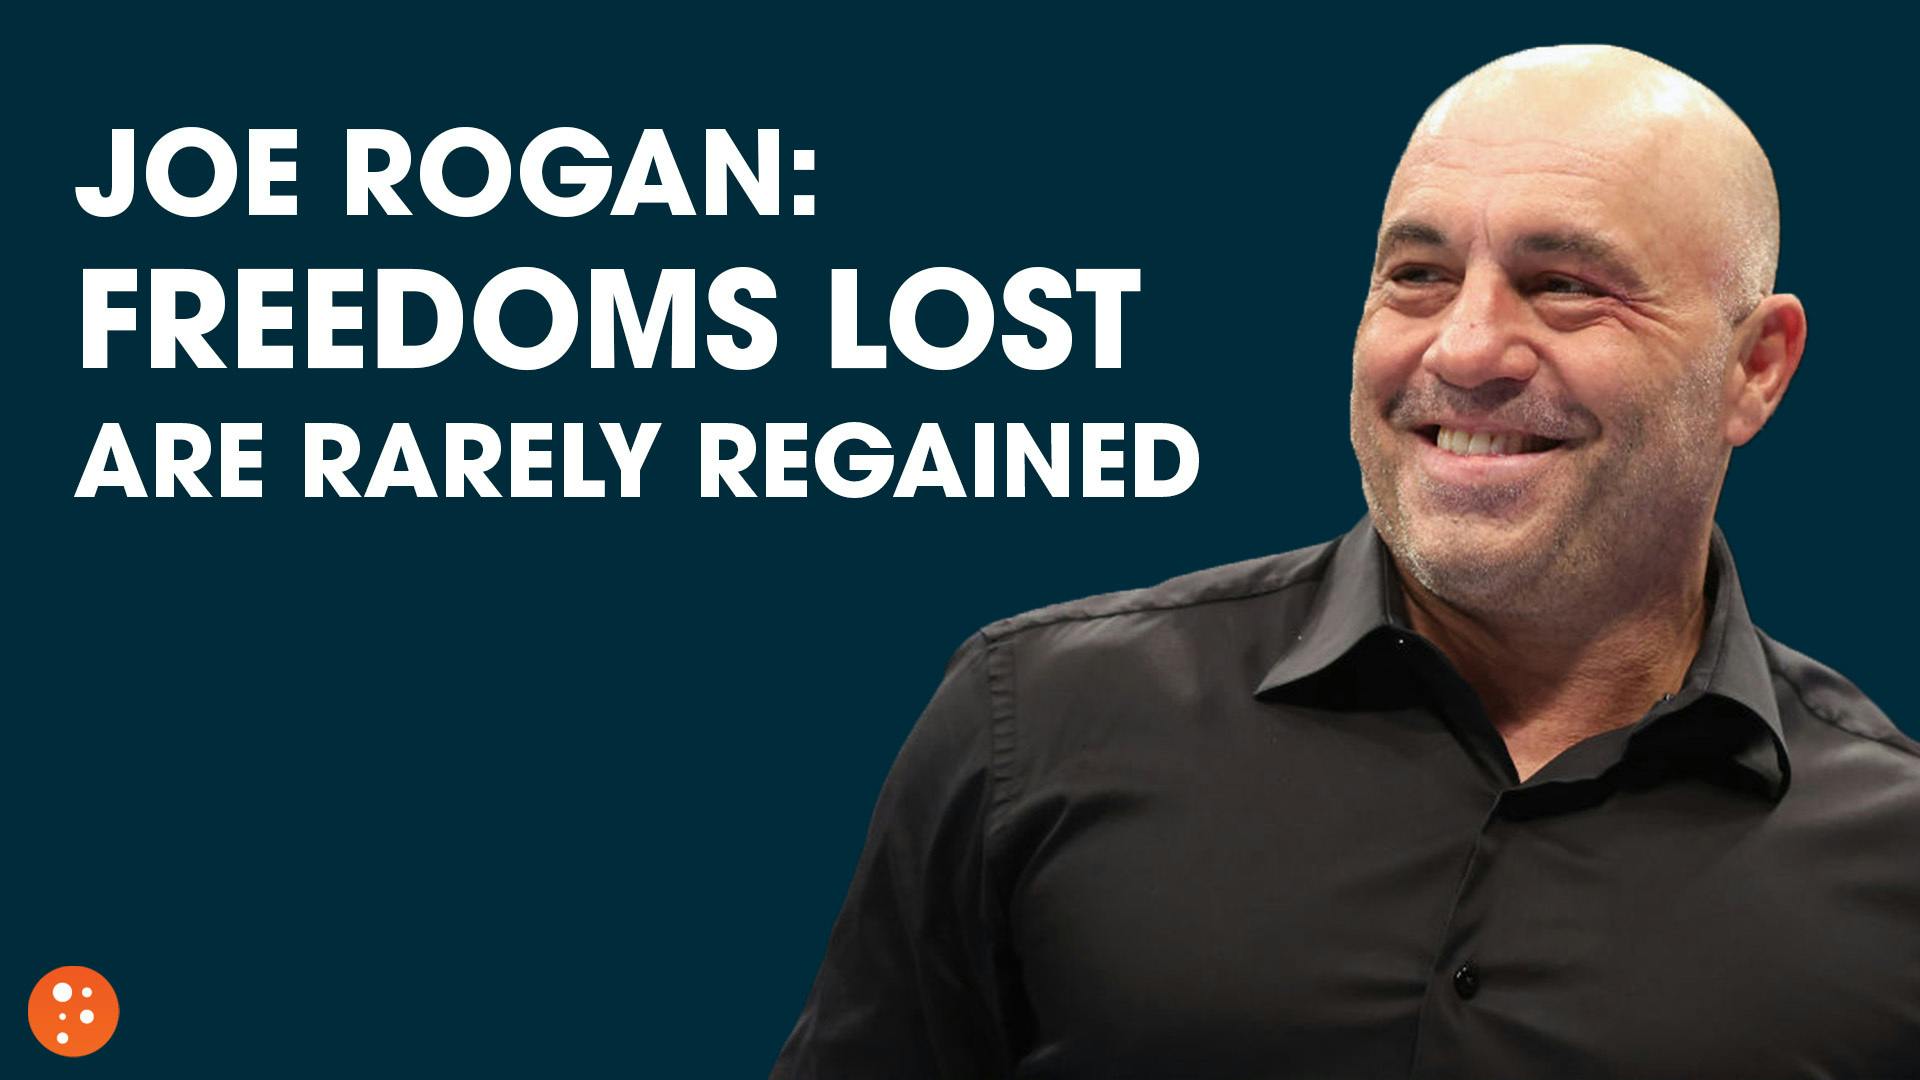 Joe Rogan: Freedoms Lost Are Rarely Regained